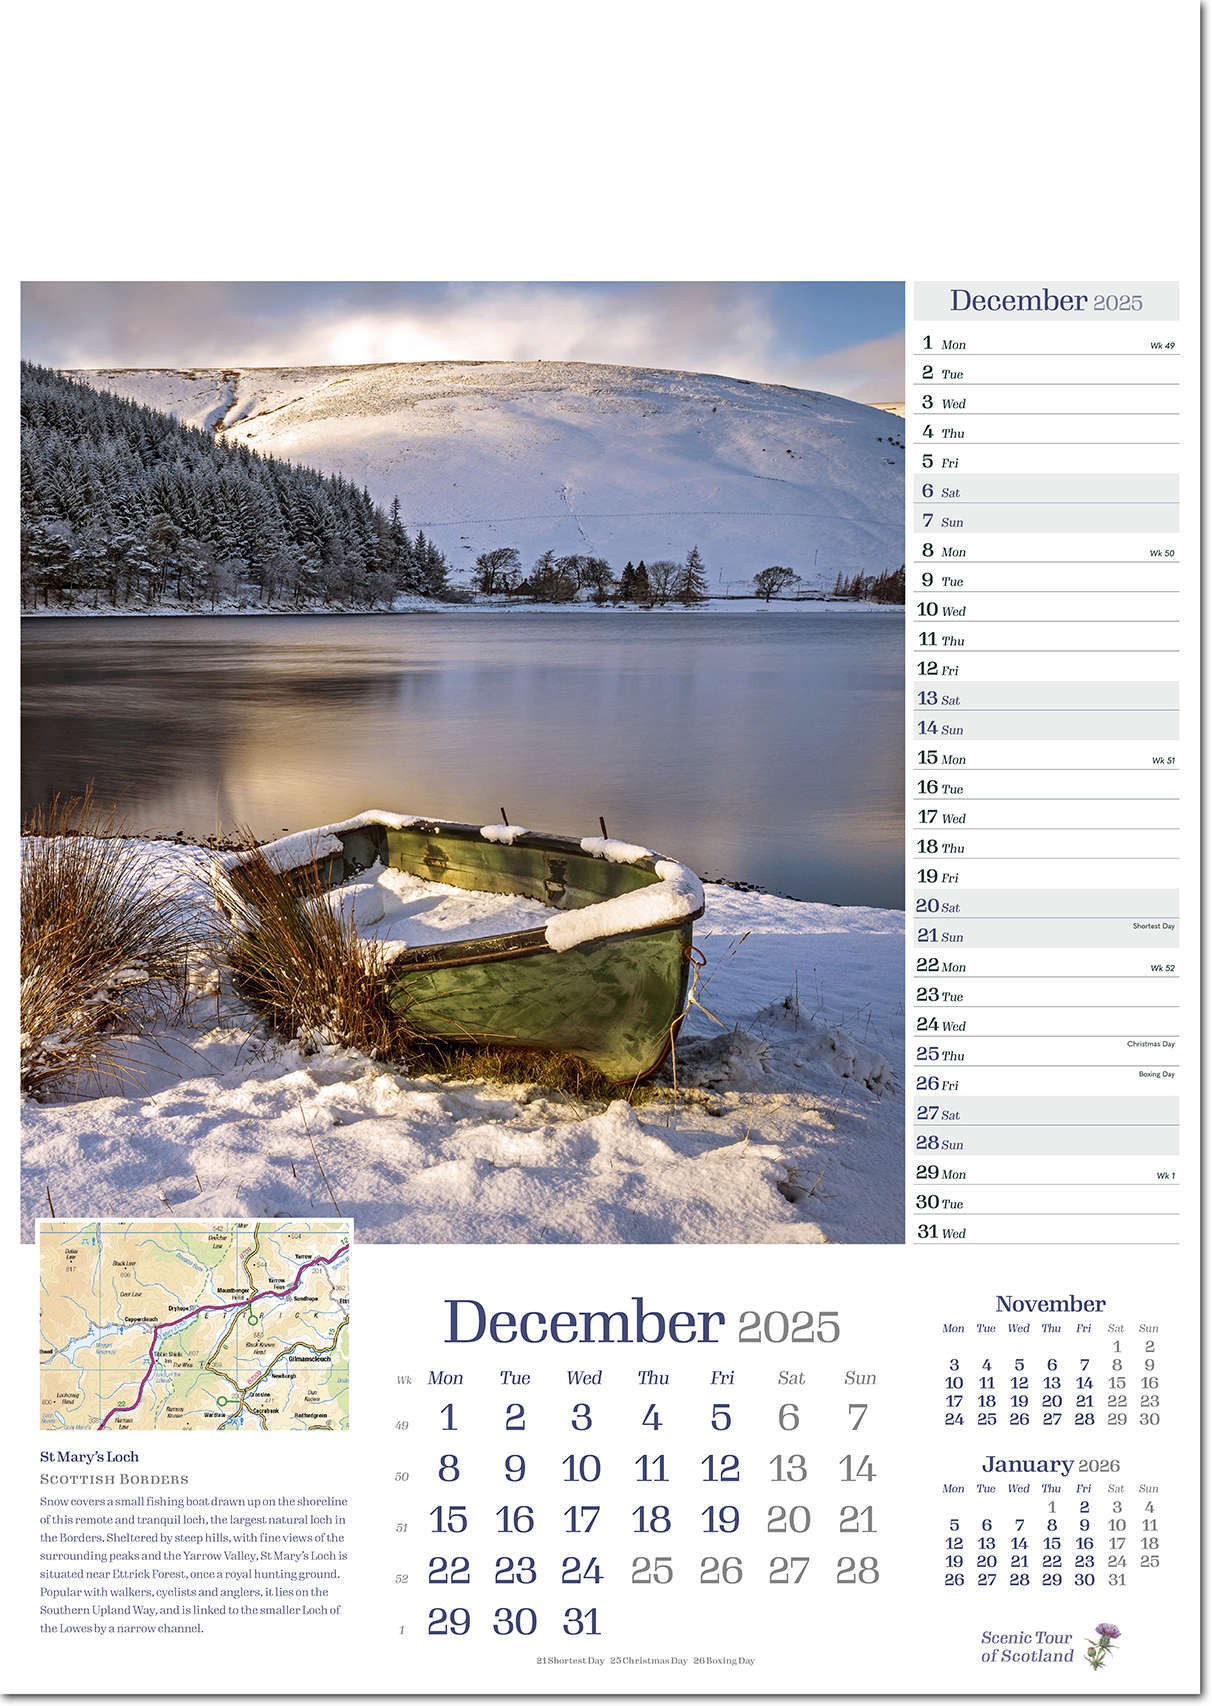 Scenic Tour of Scotland Calendar